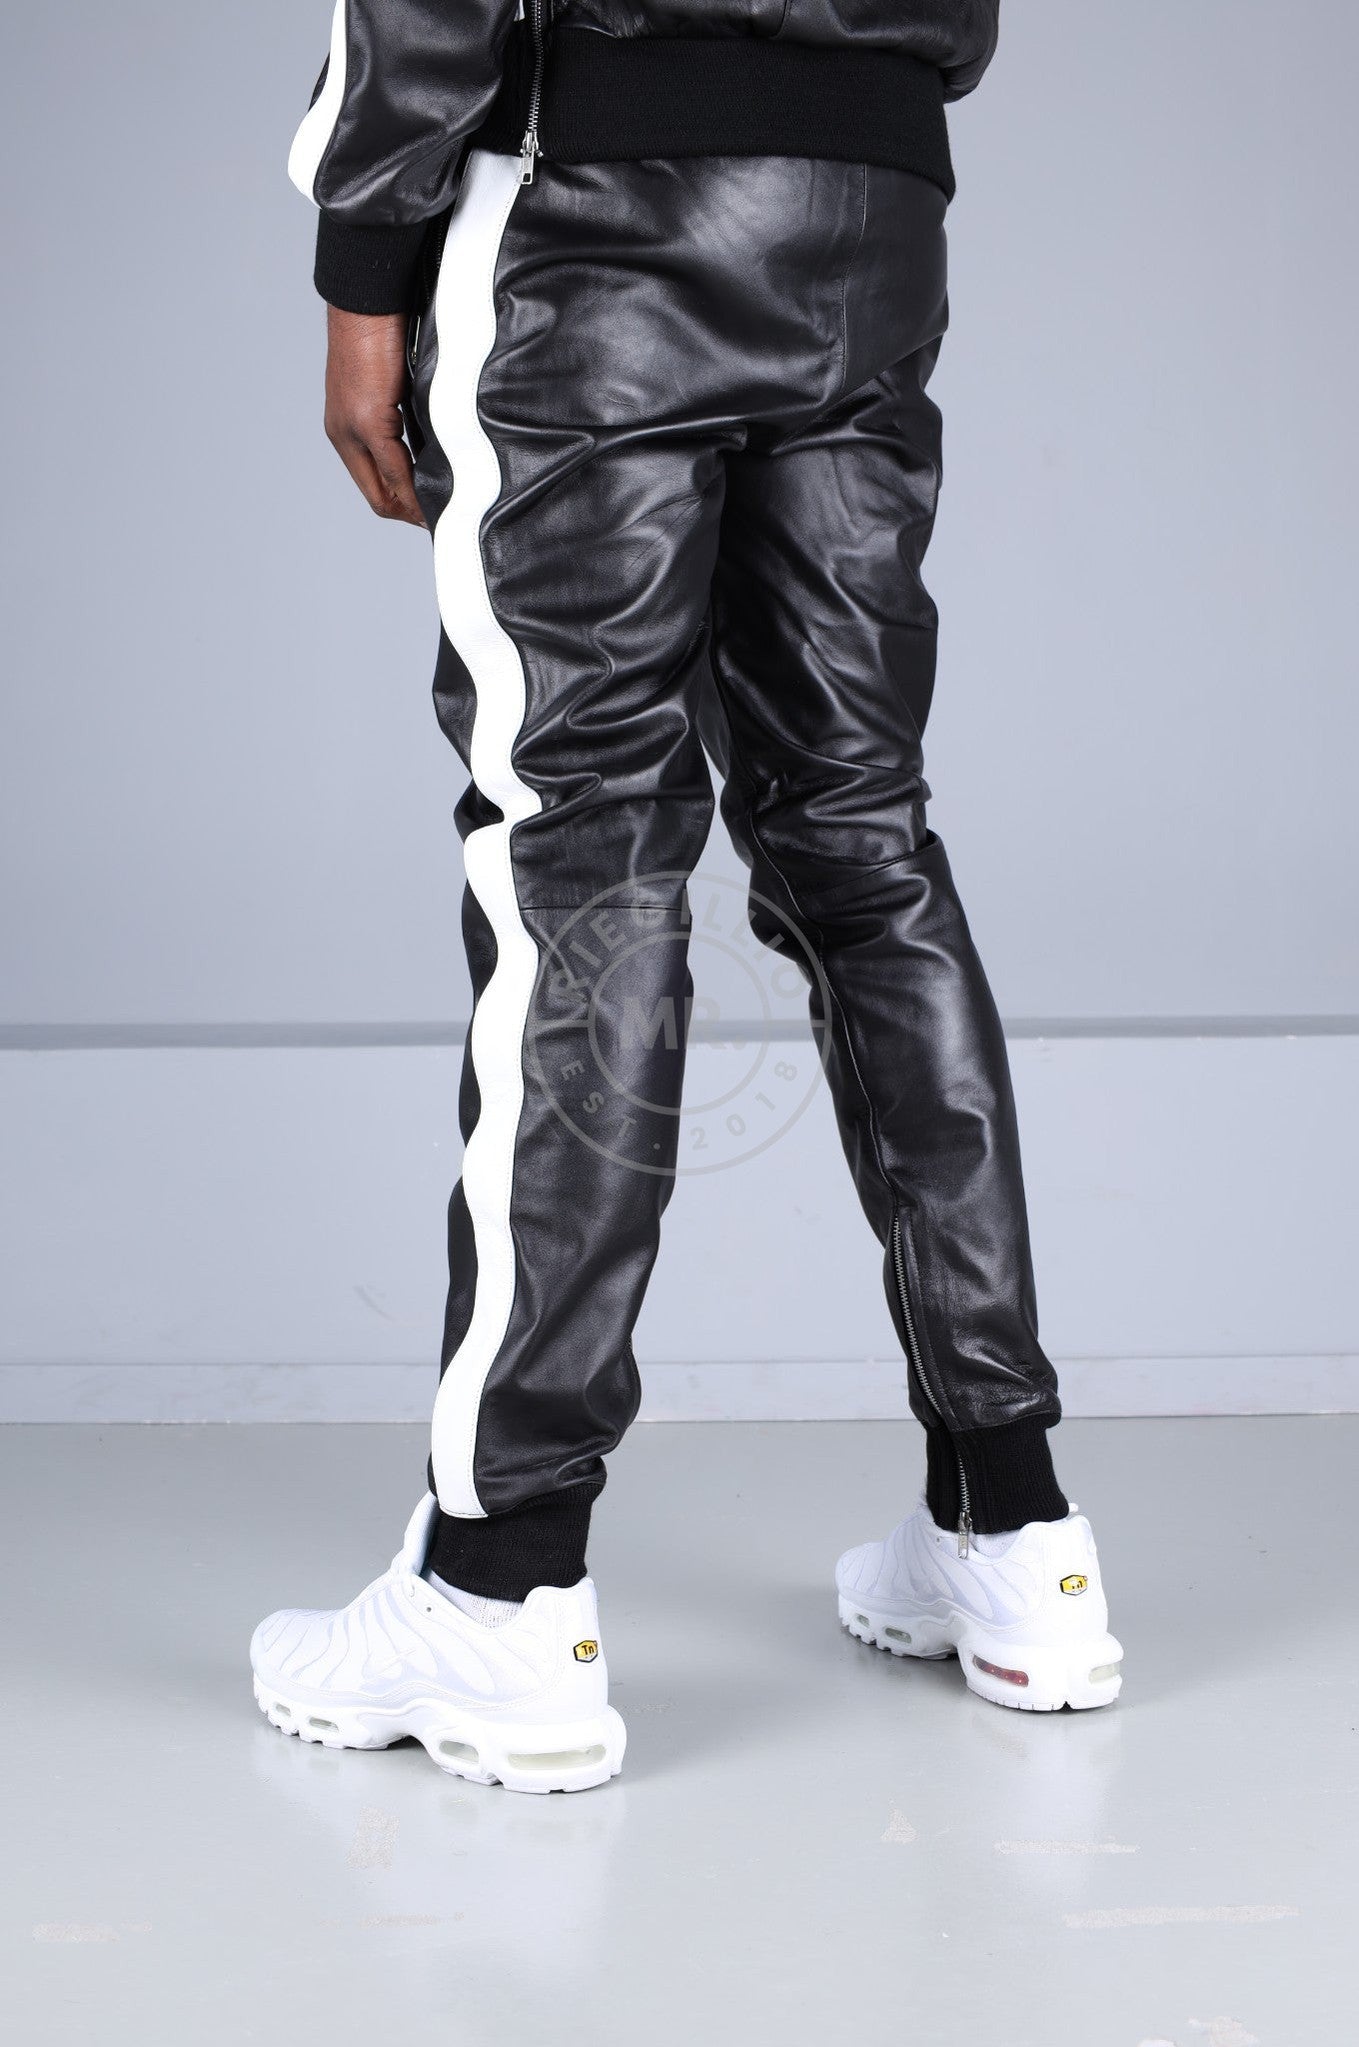 Black Leather Sports Pants - White Stripe at MR. Riegillio